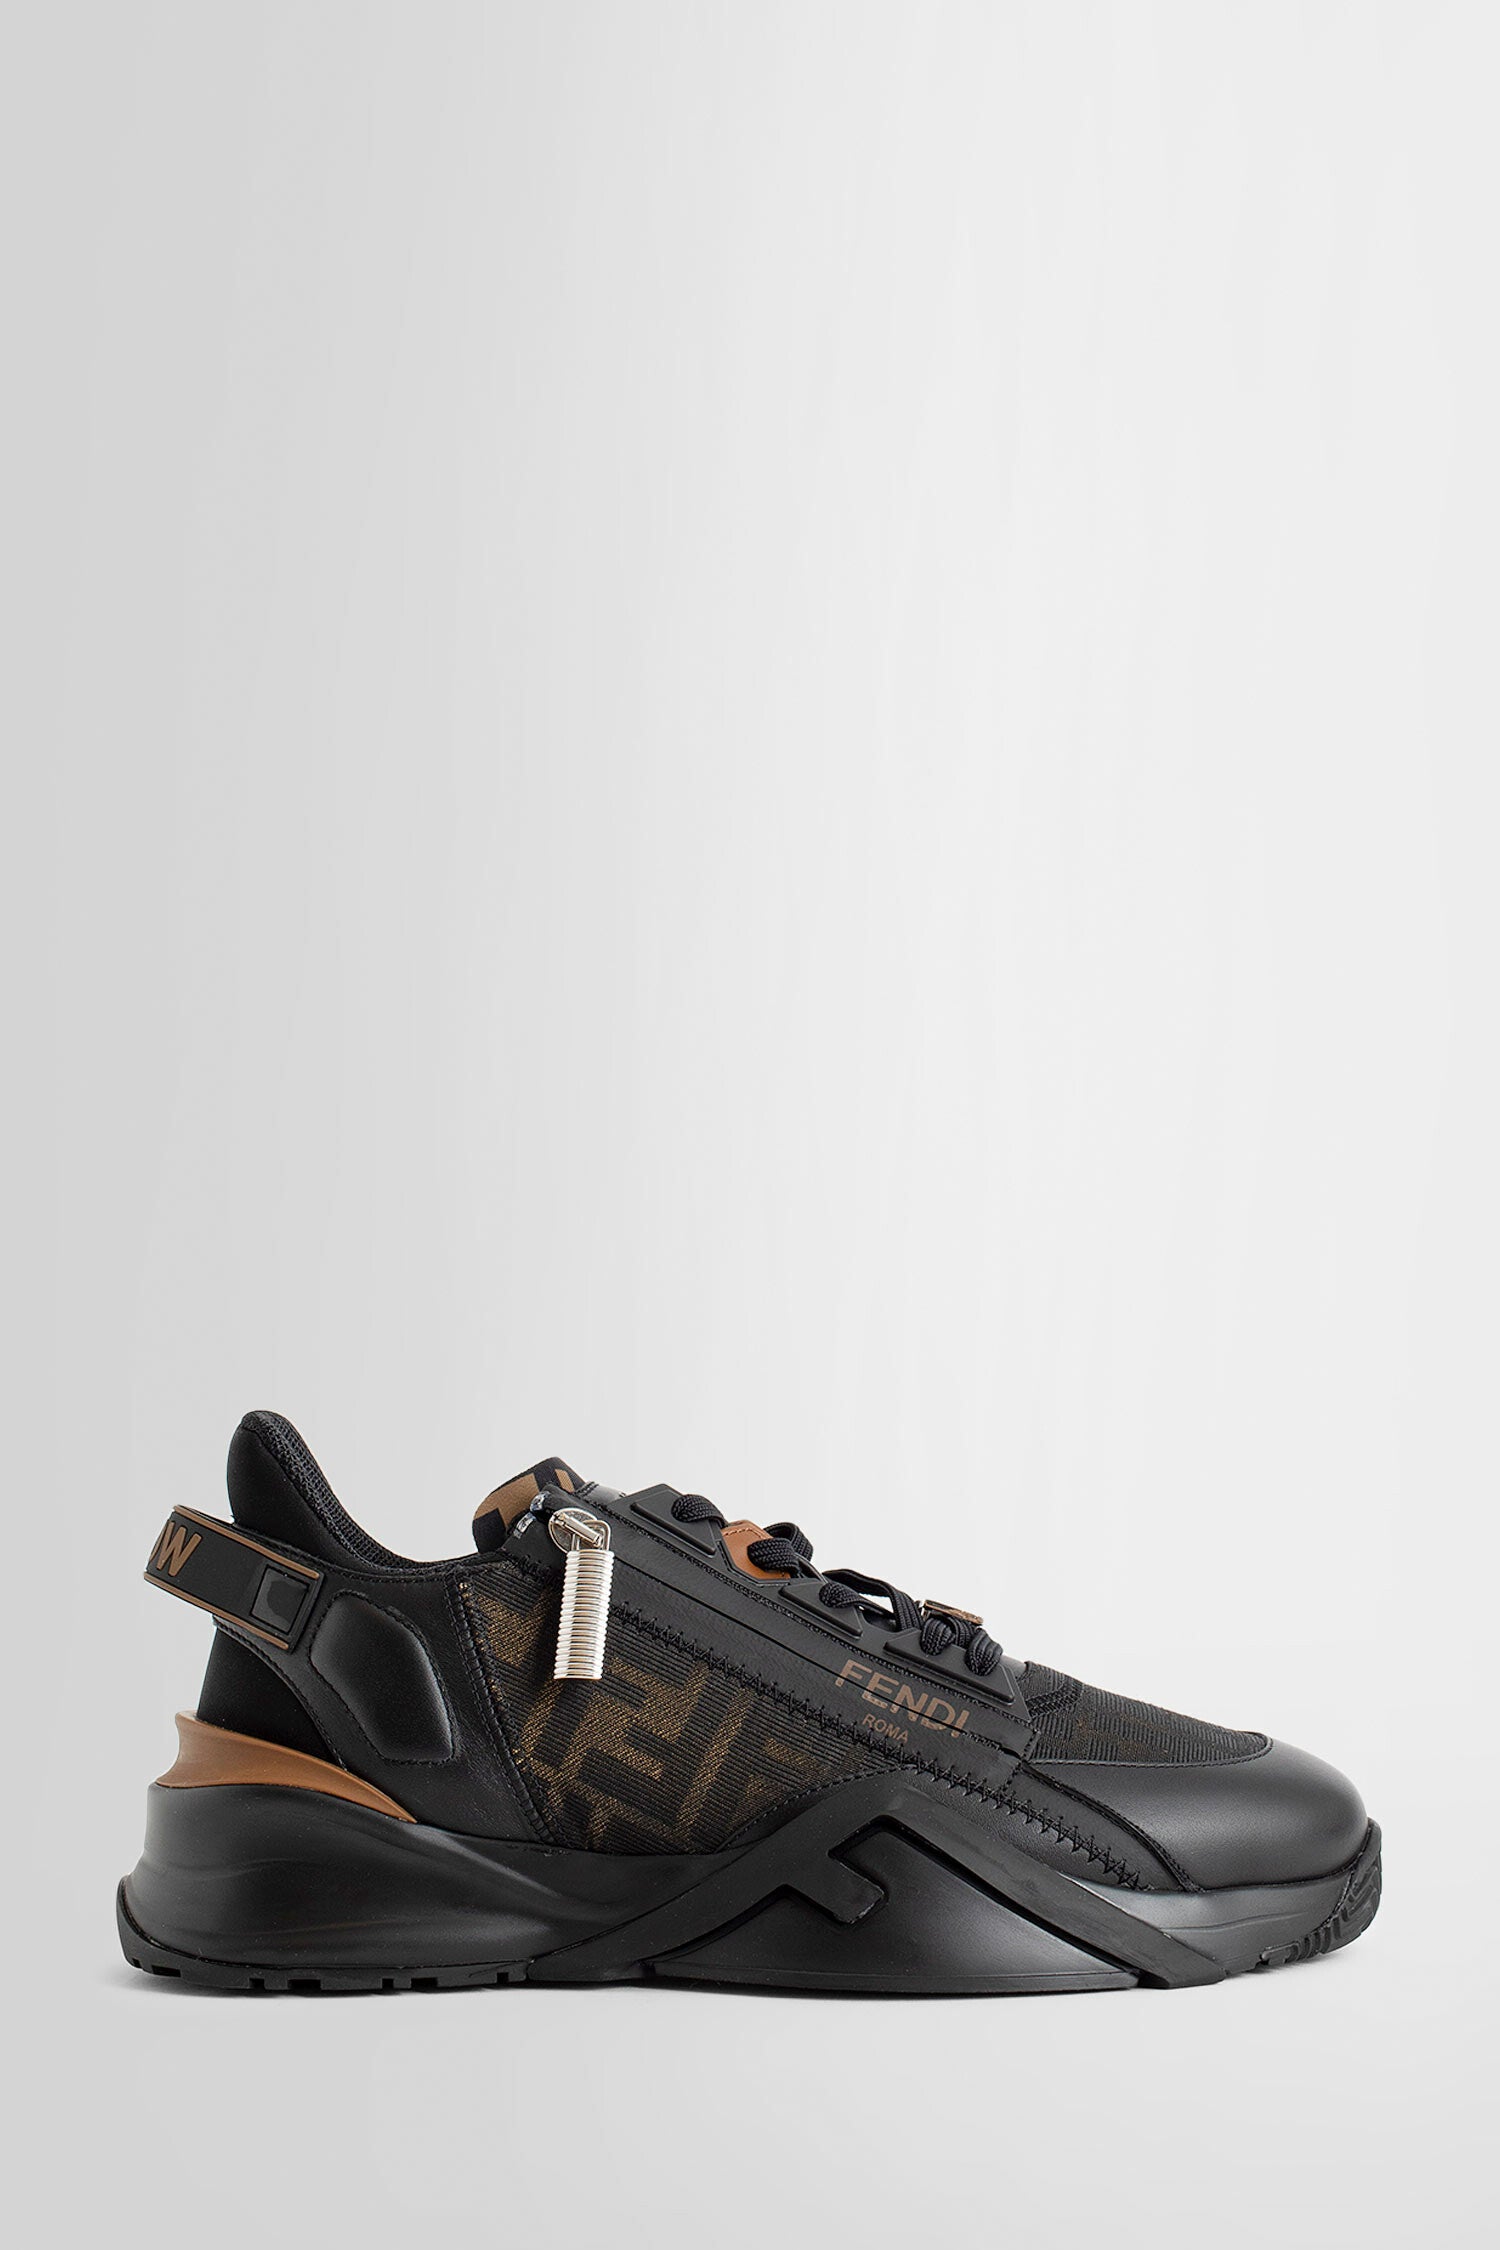 Fendi Tennis Shoes For Men Sale | website.jkuat.ac.ke